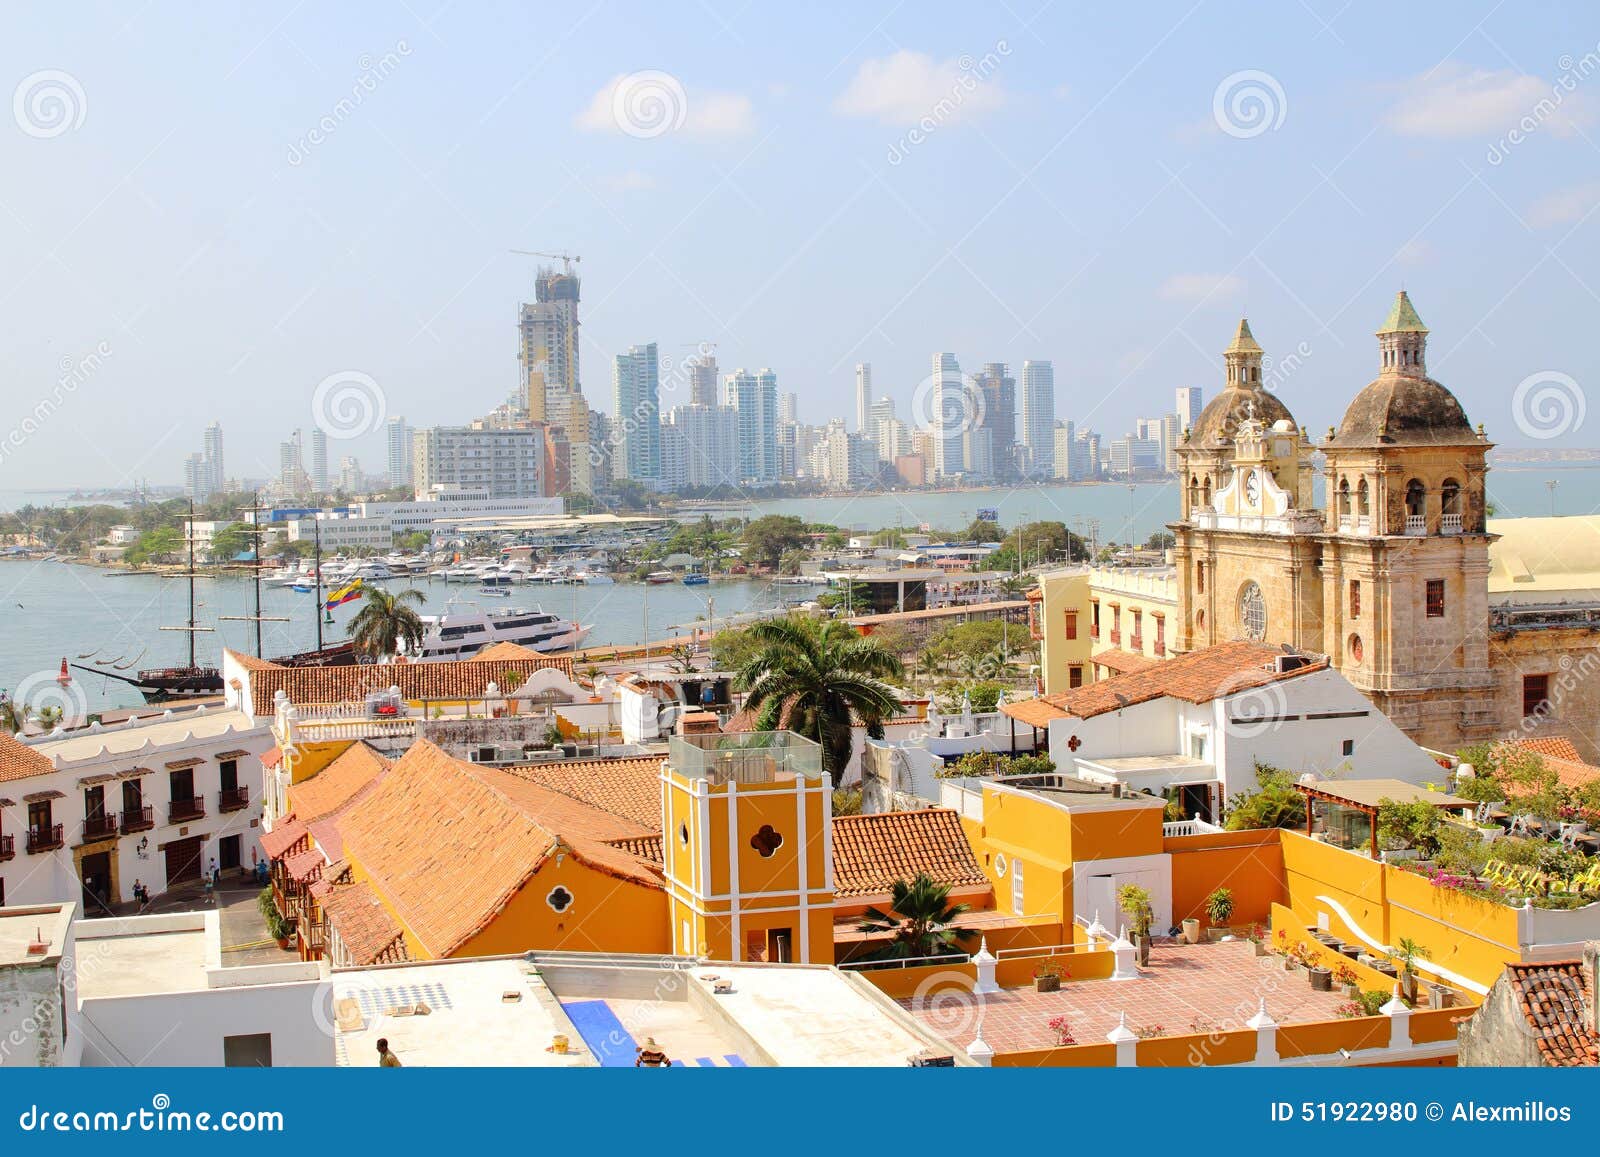 cartagena, colombia skyline. historic city, bocagrande and port